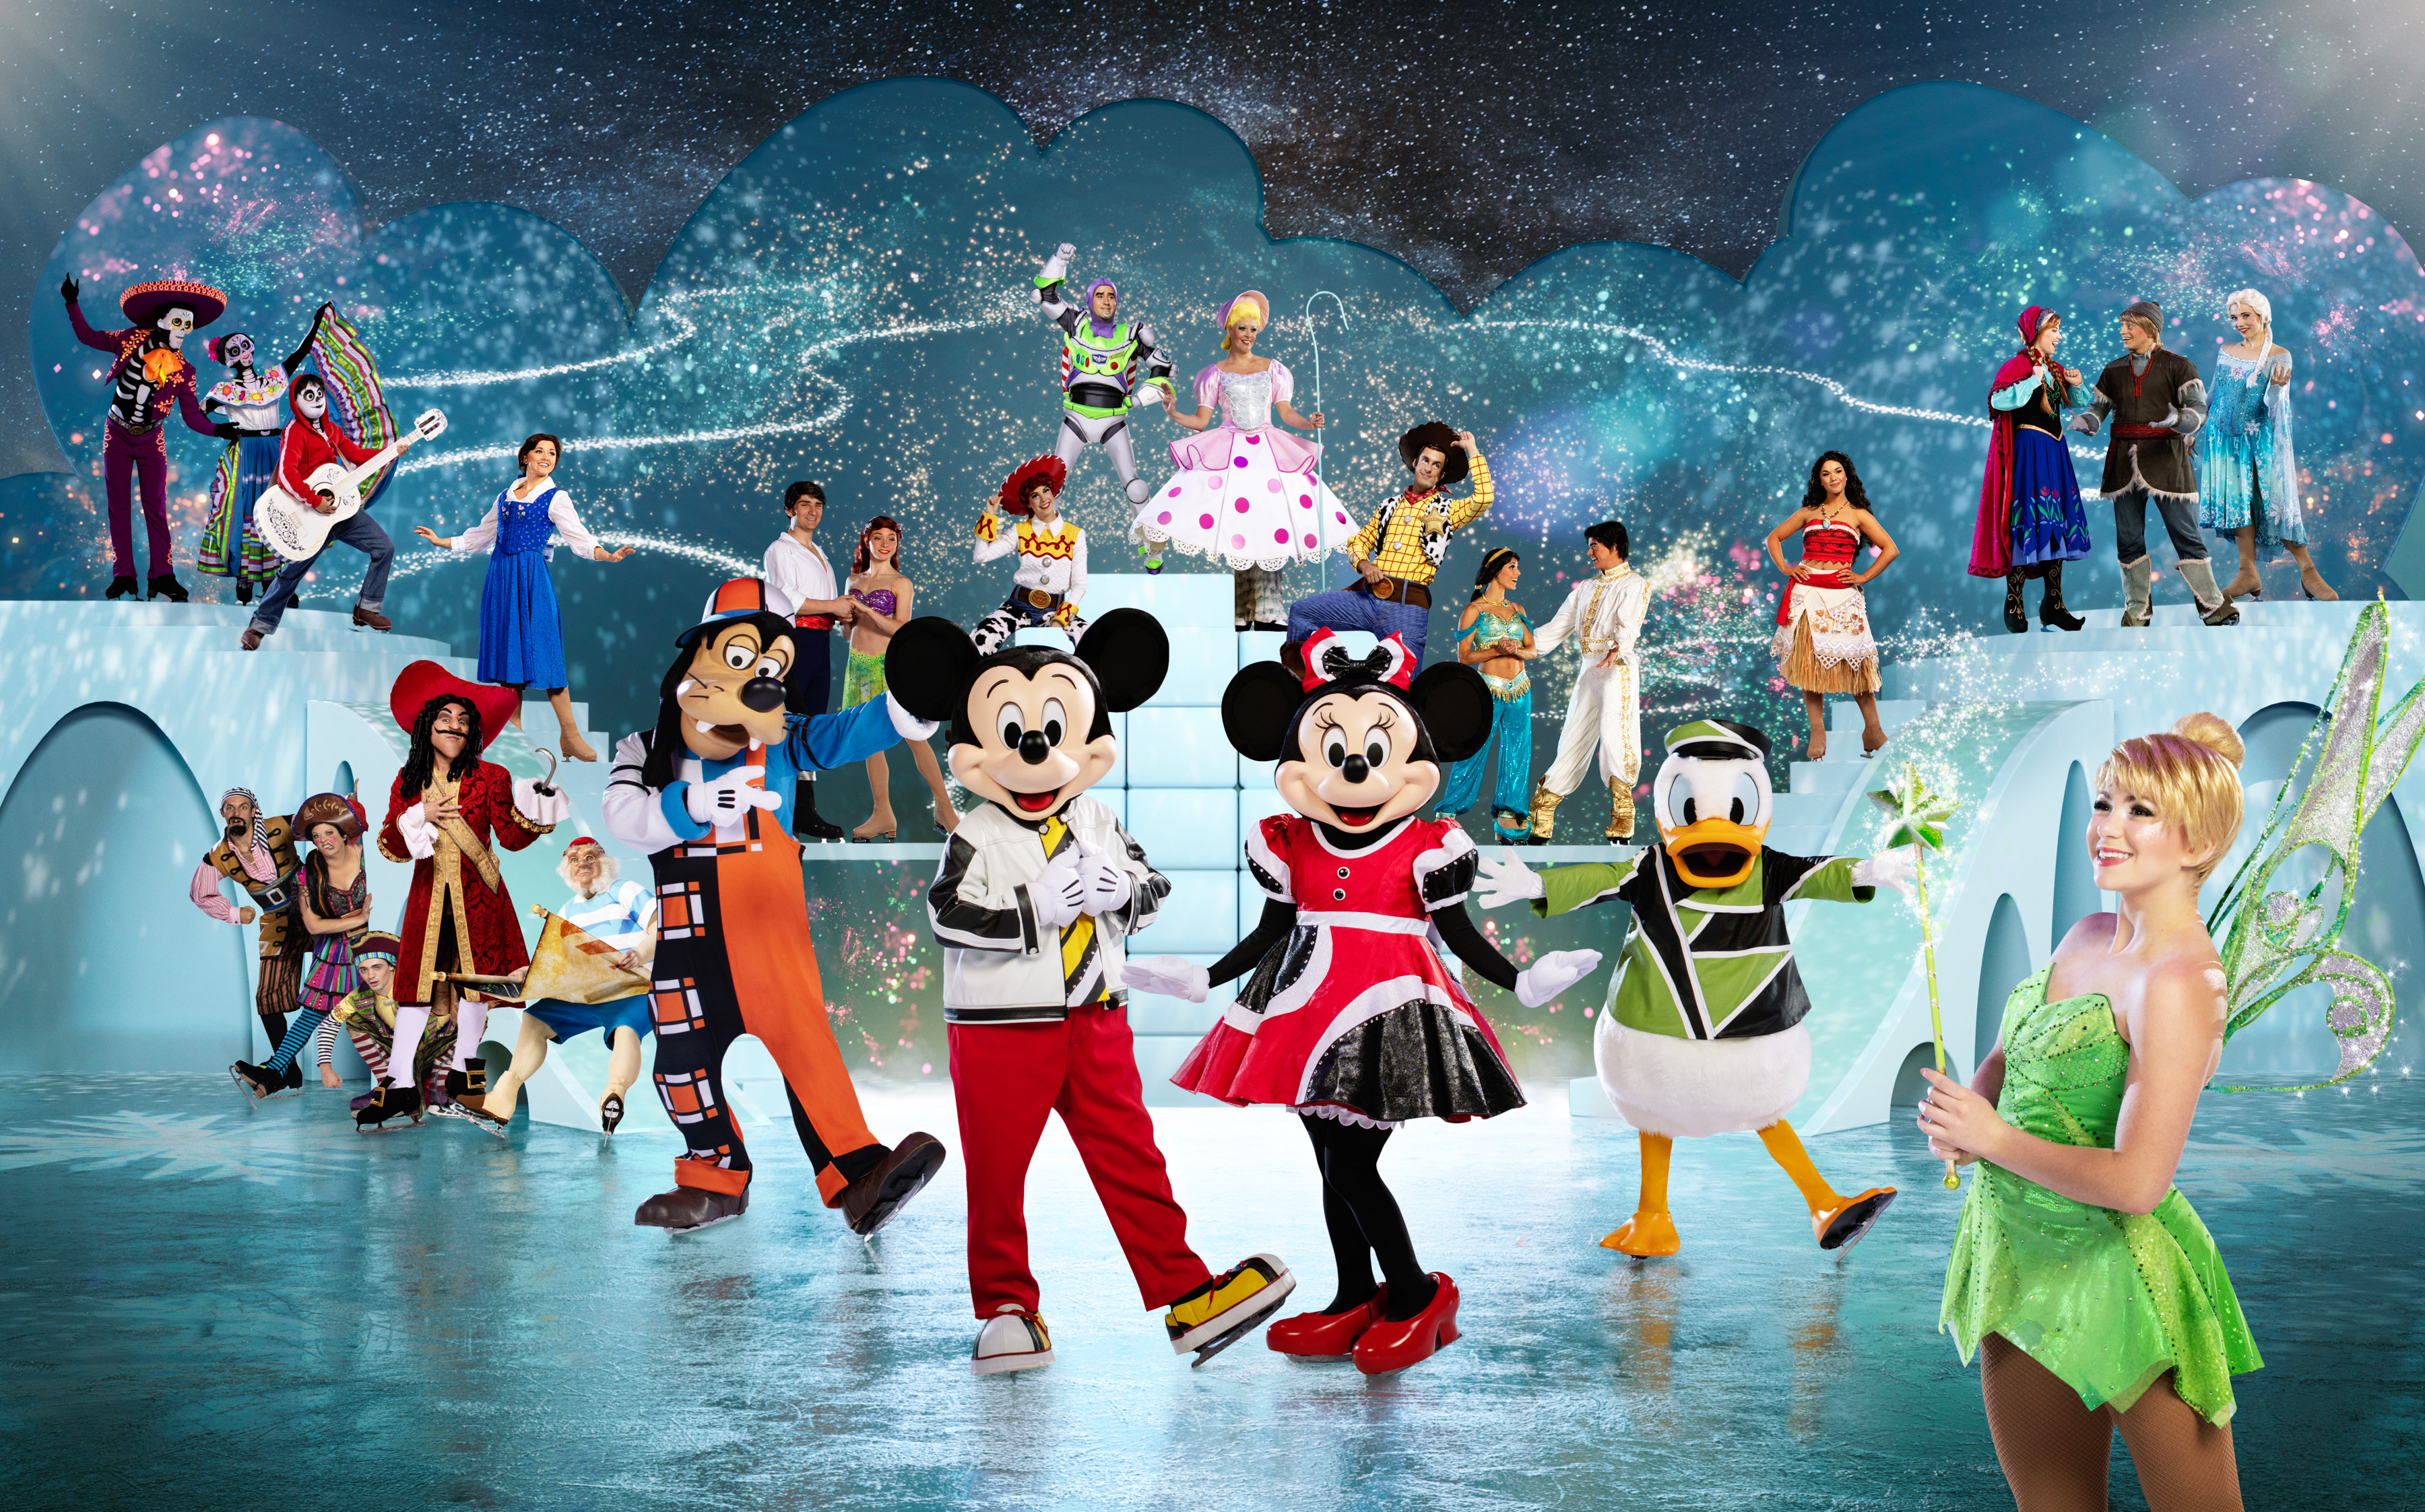 Трансляция дисней. Disney on Ice. Ледовое шоу Disney on Ice. Телешоу Дисней. Дисней новый год.